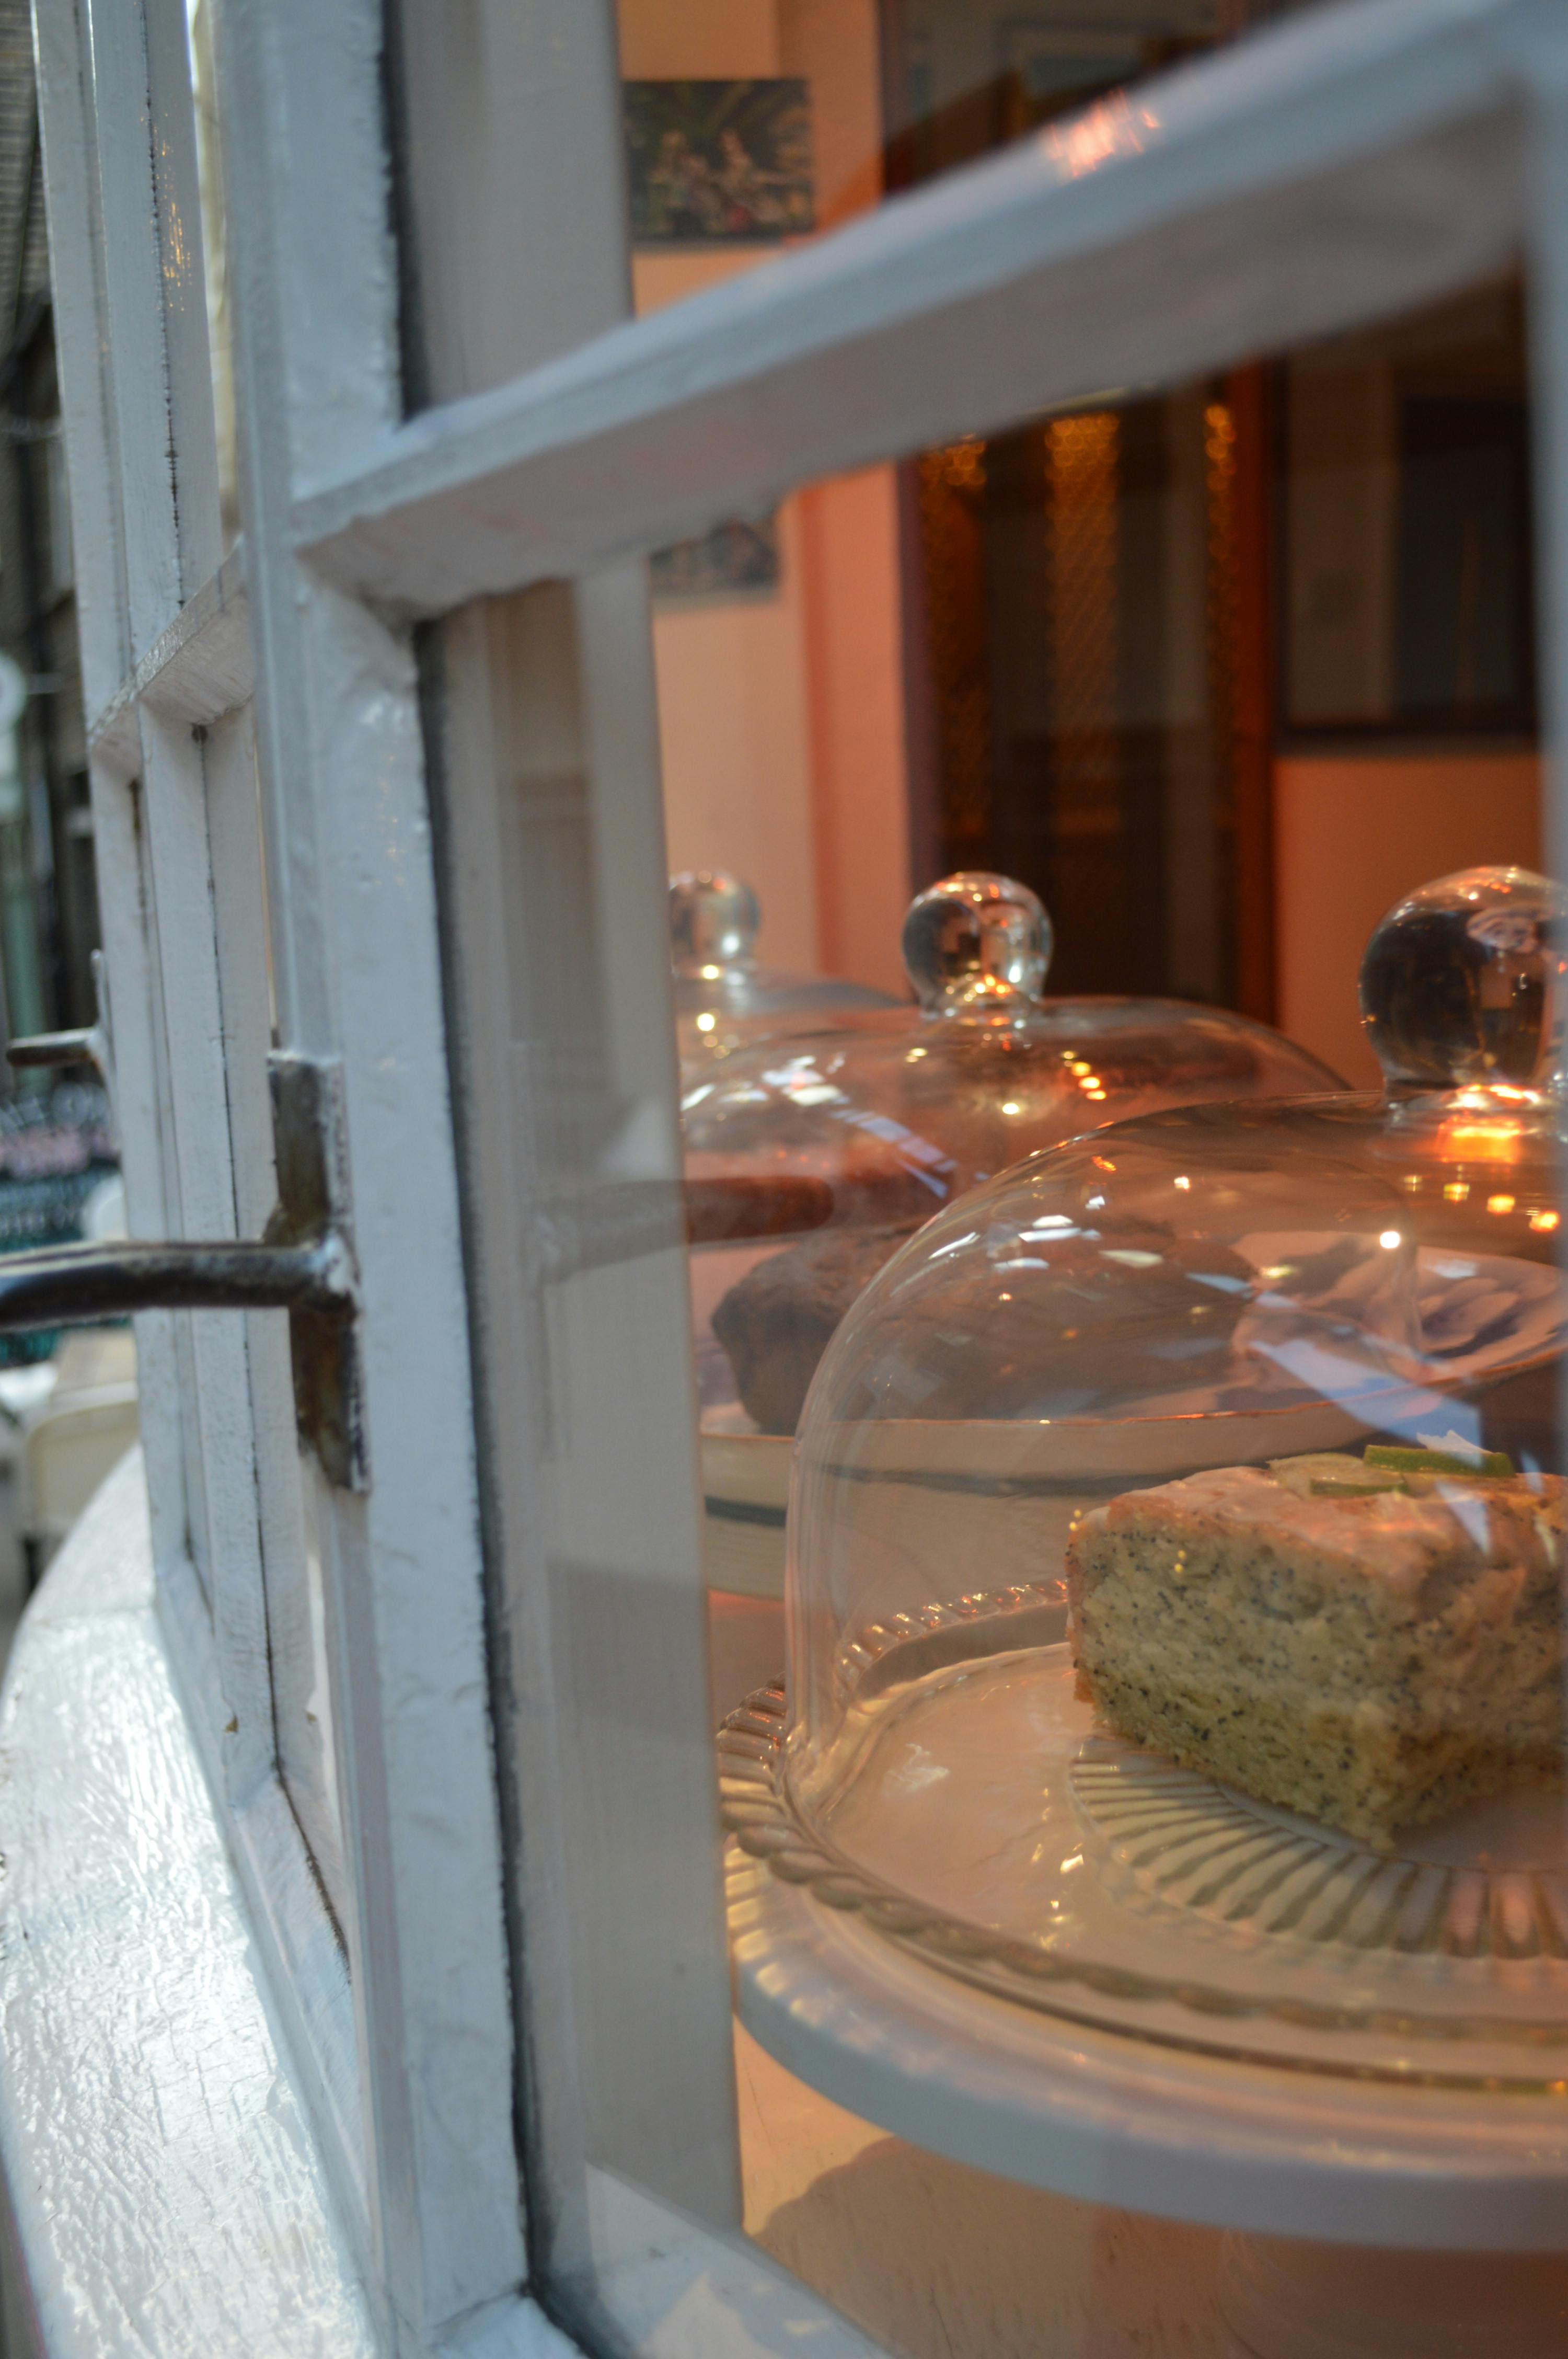 Free stock photo of cakes, glass window, tart